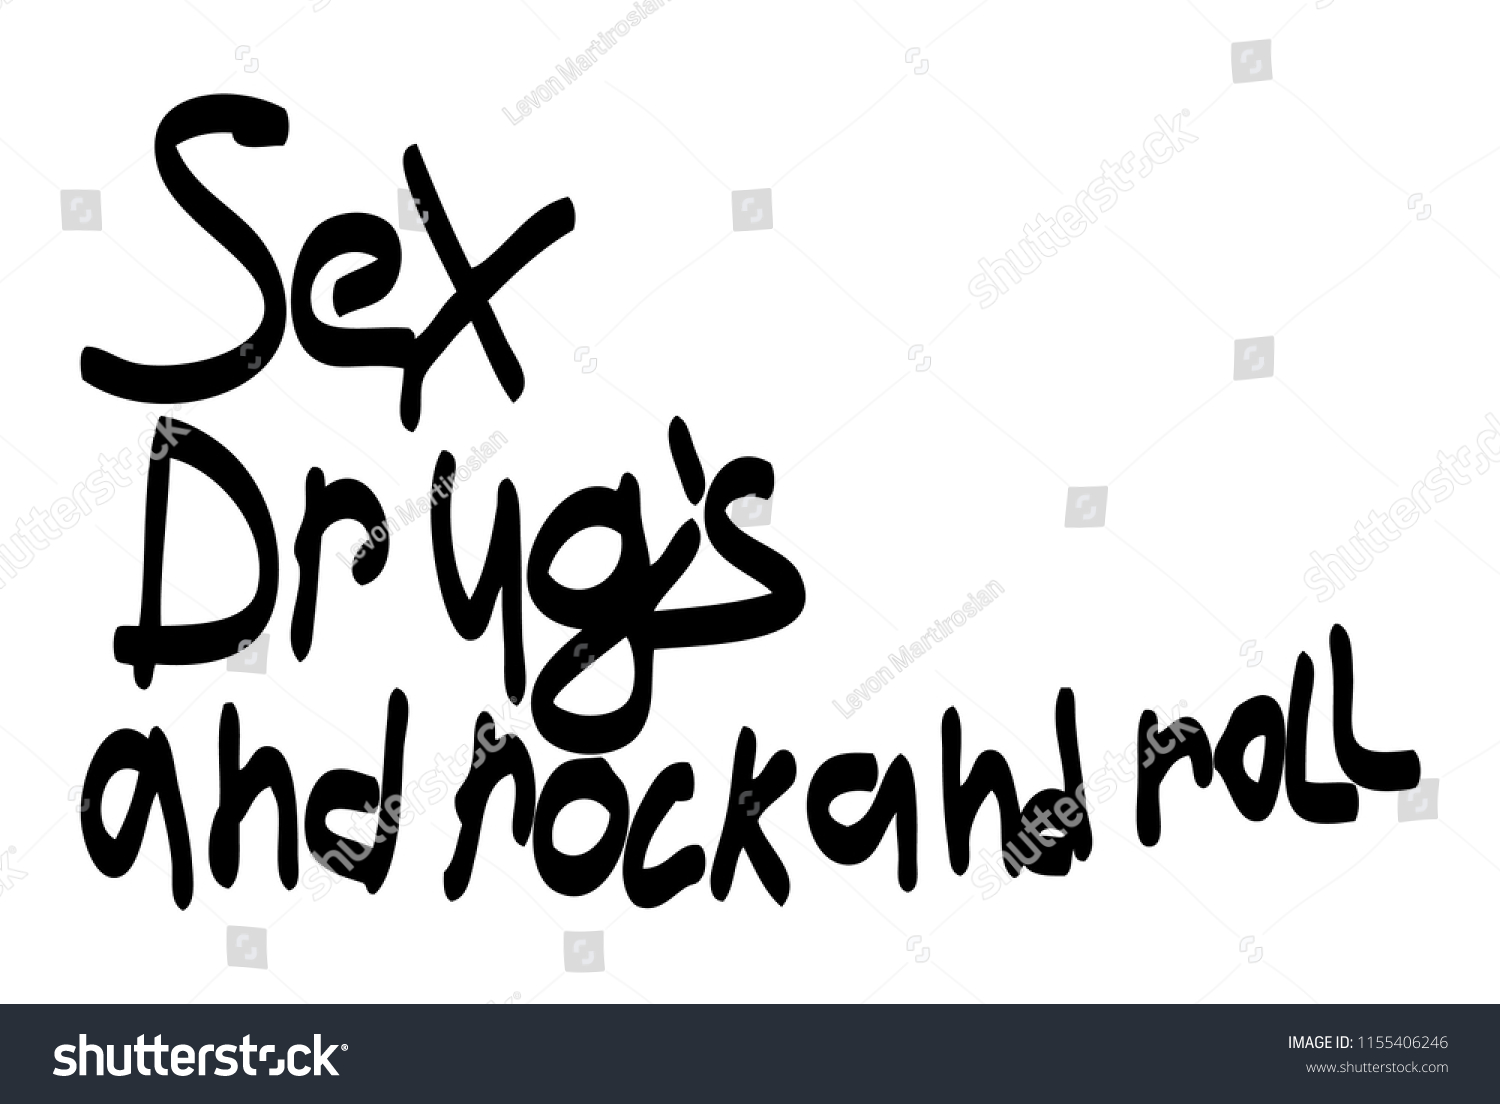 Sex Drugs Rock N Roll Hand Stock Vector Royalty Free 1155406246 Shutterstock